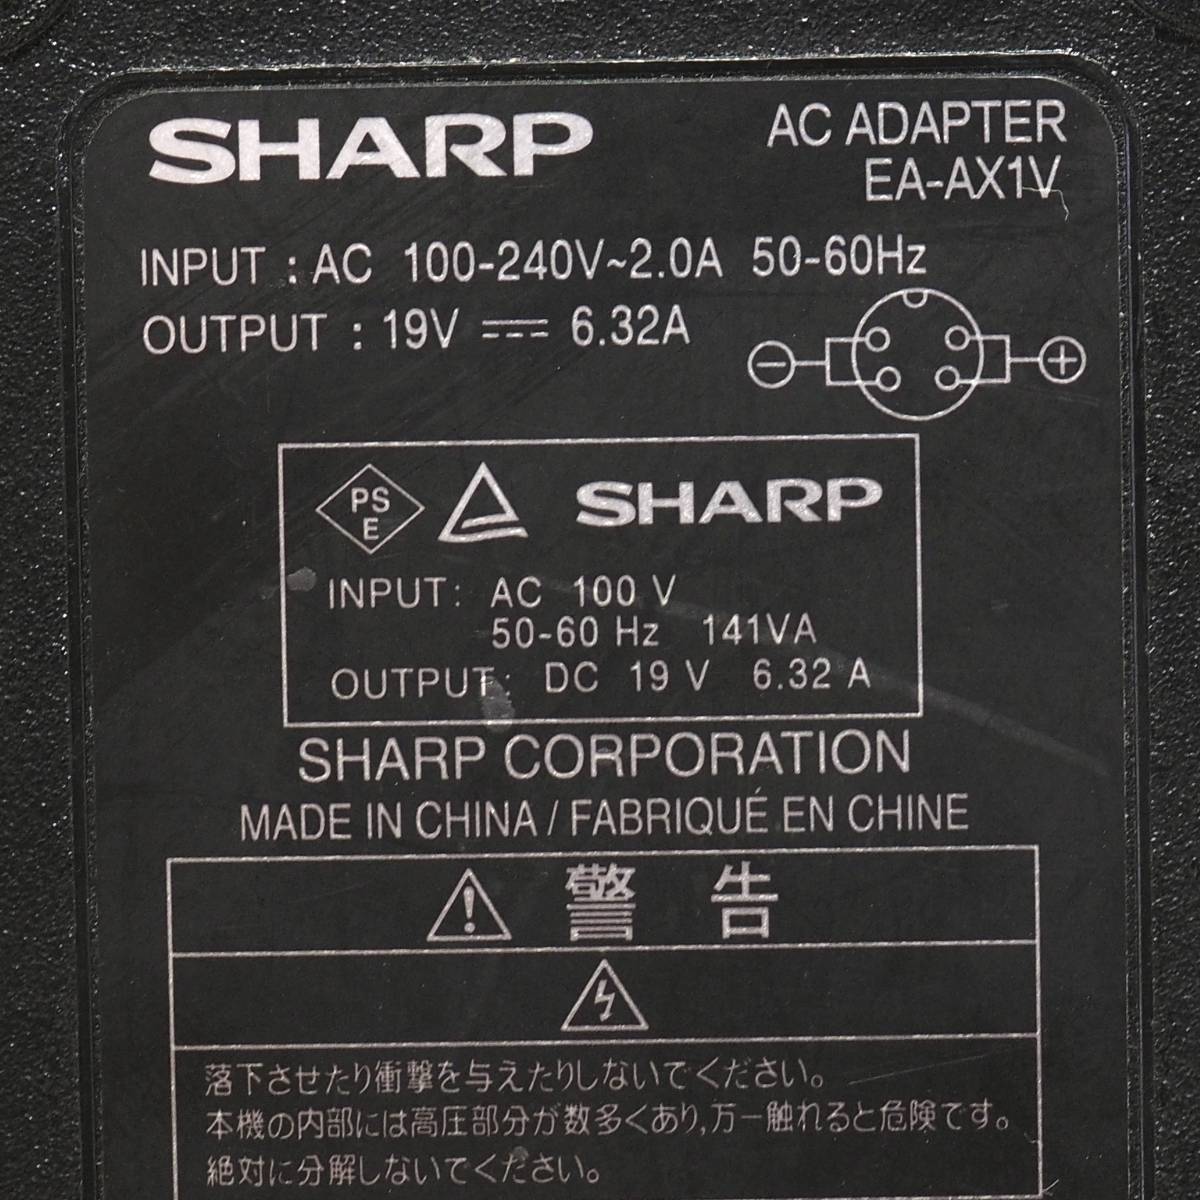  бесплатная доставка 19V/6.32A AC адаптор sharp EA-AX1V PC для напряжение проверка settled OK